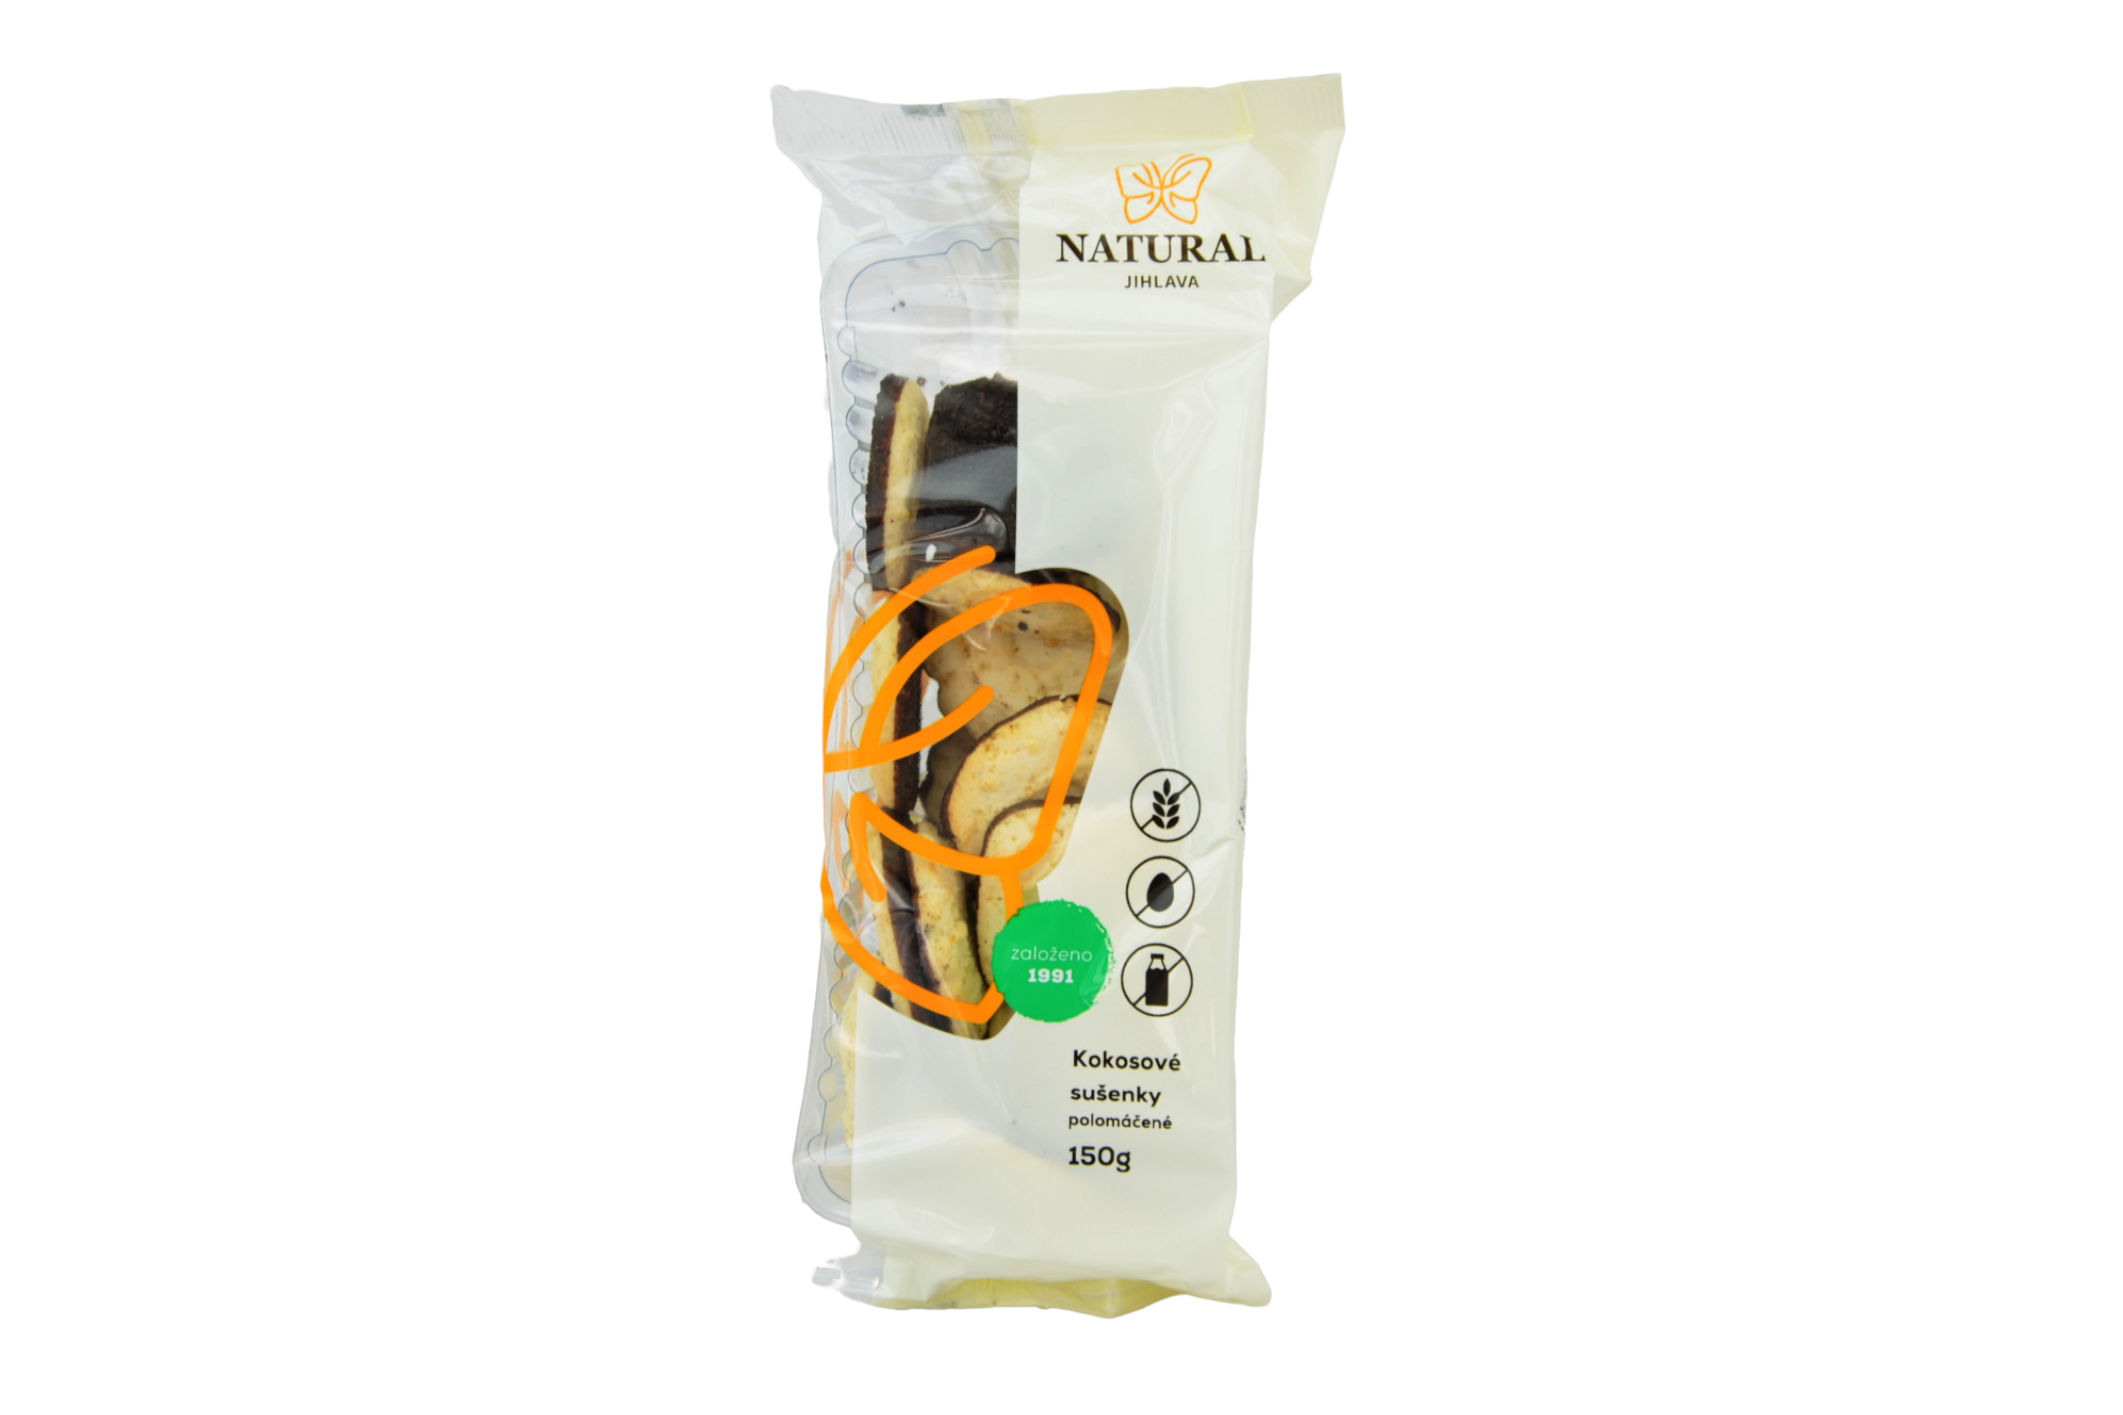 Natural Jihlava Sušenky kokosové polomáčené bez lepku, vajec a mléka - Natural 150g 16 ks